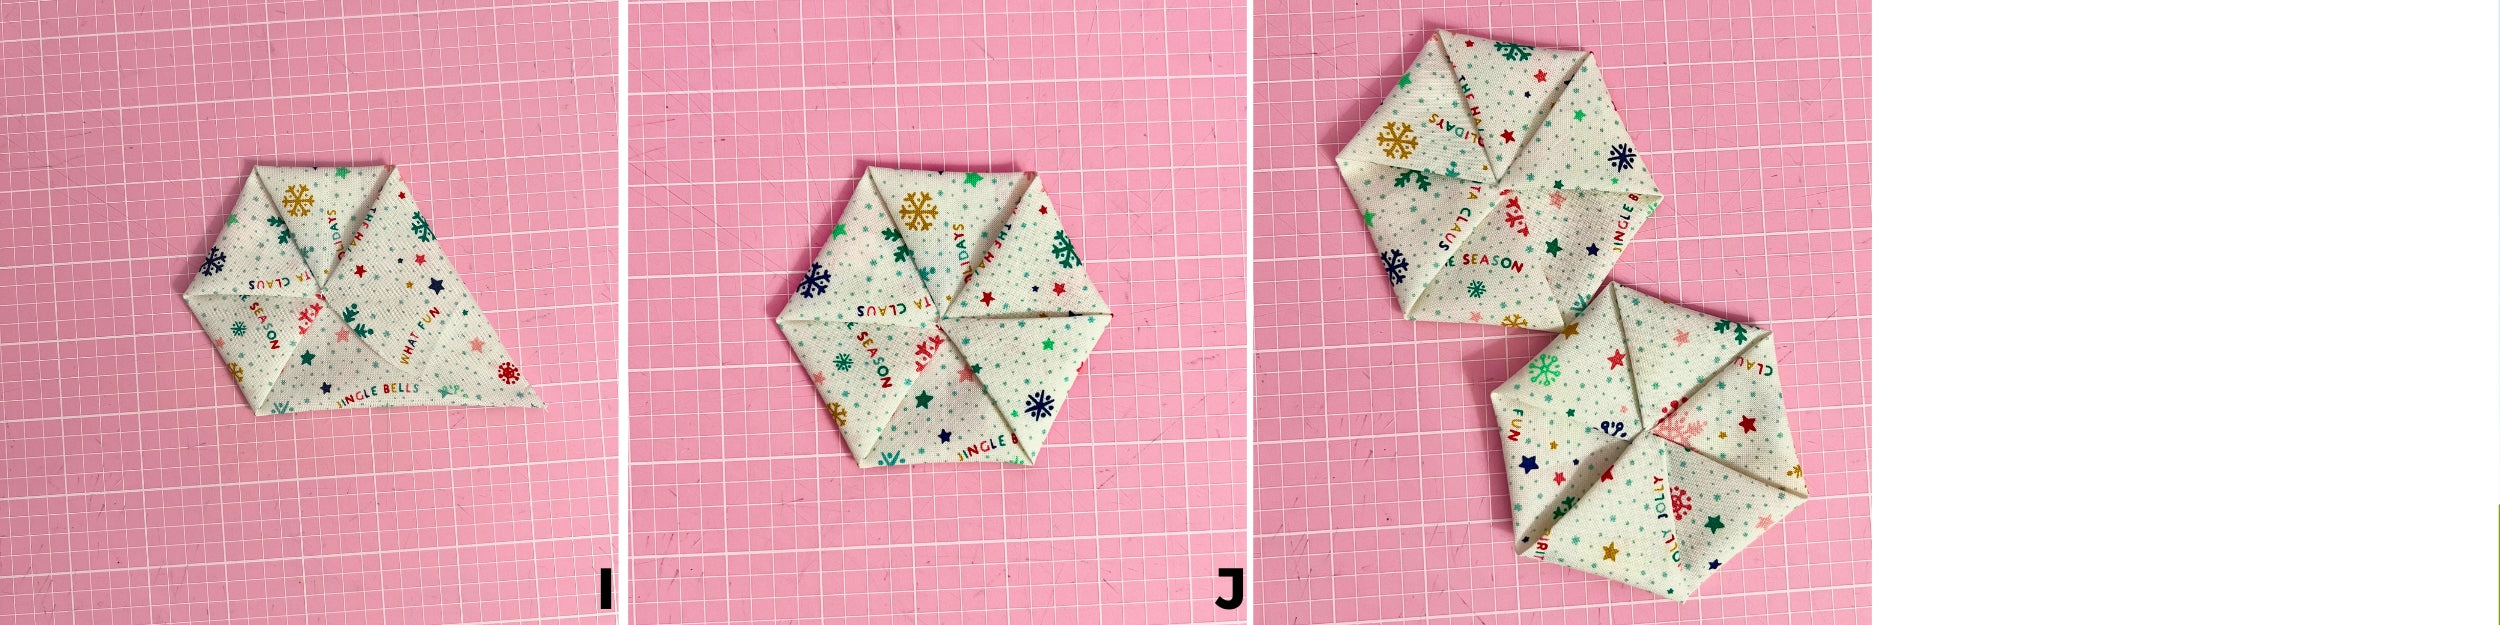 How-to sew a folded hexagon - Craftapalooza Designs